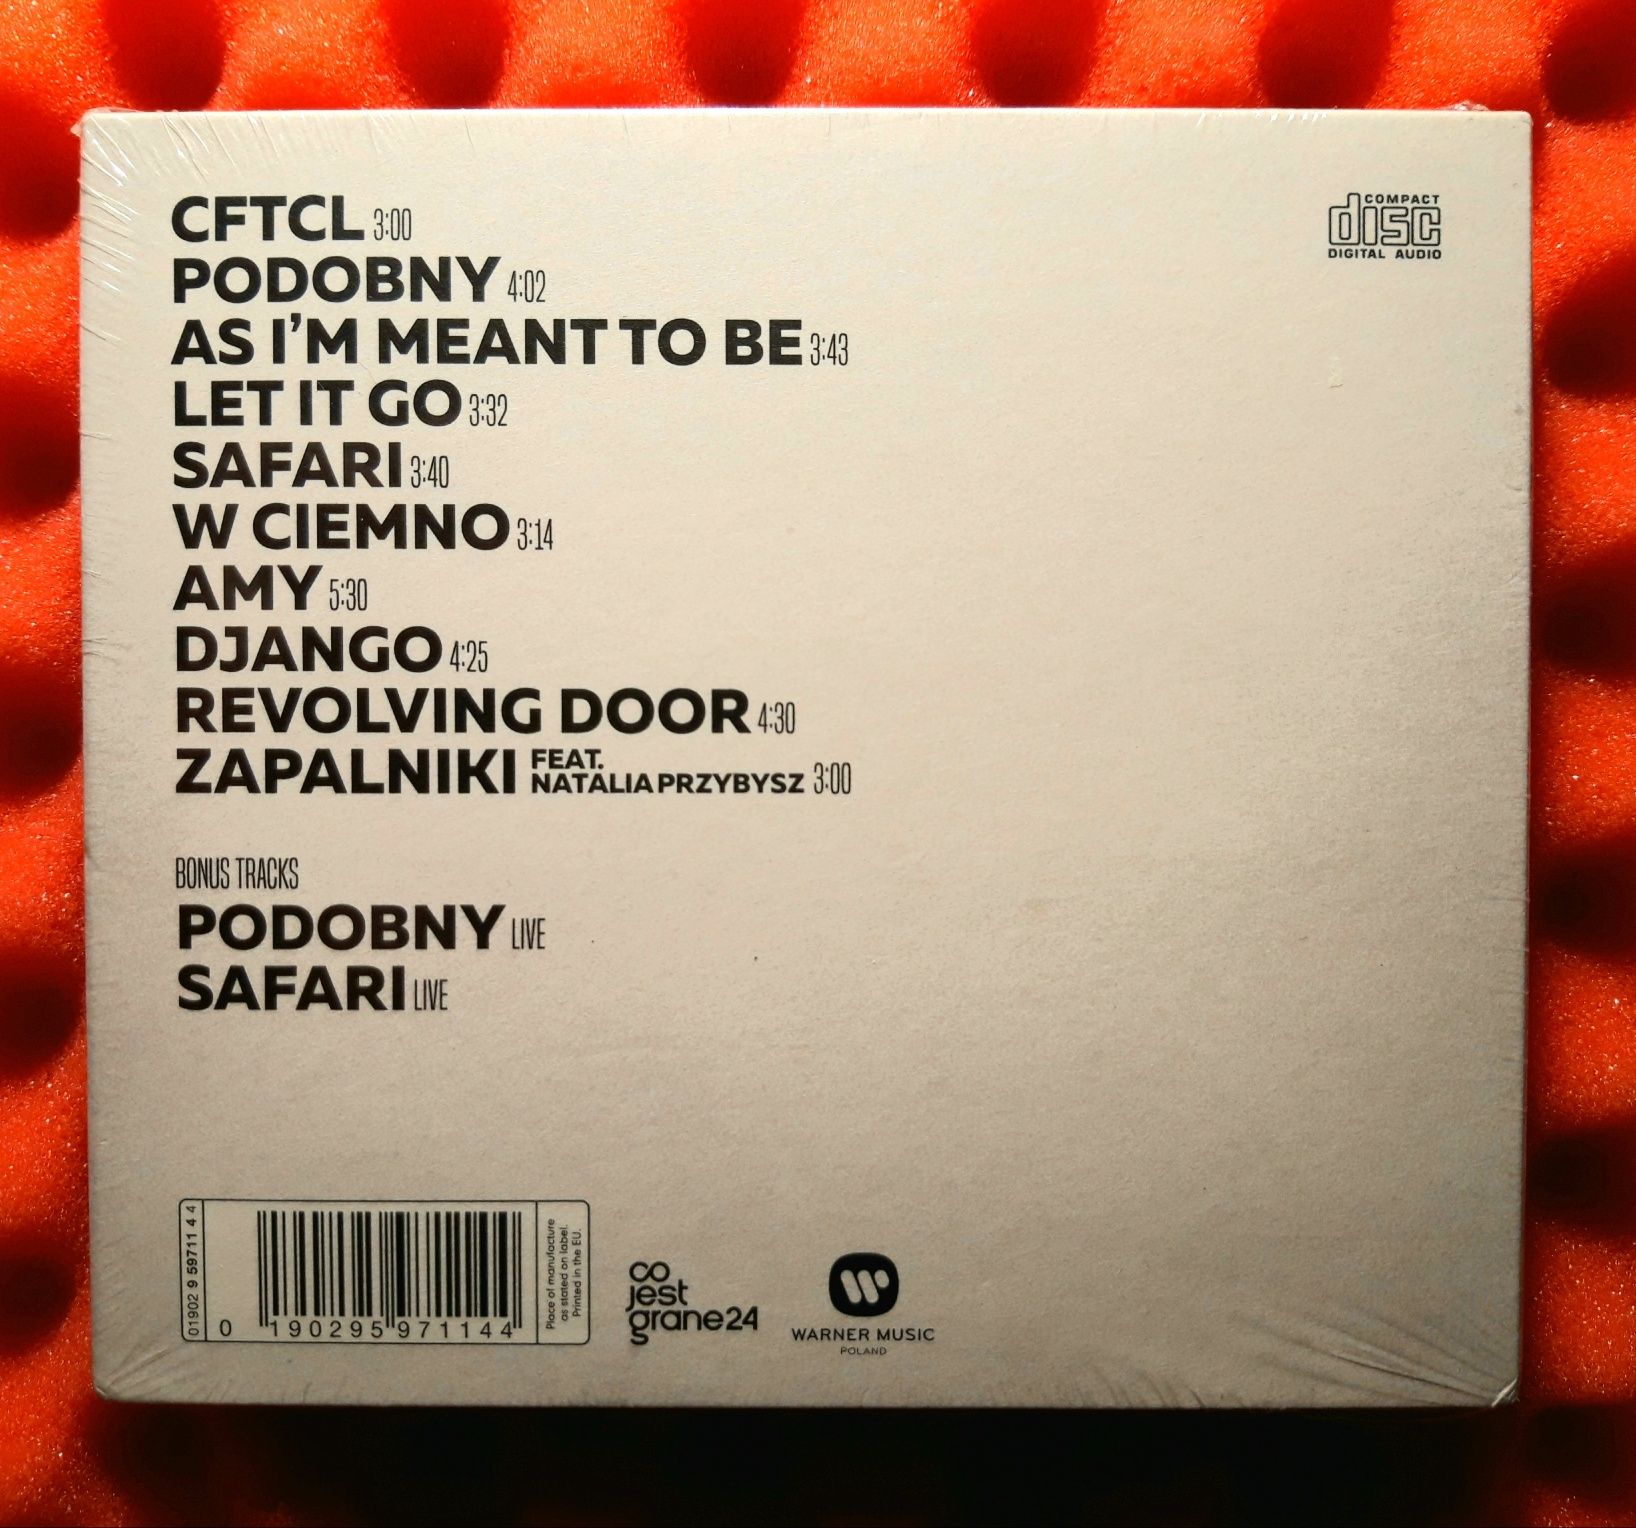 Piotr Zioła – Revolving Door (CD, 2016, FOLIA)